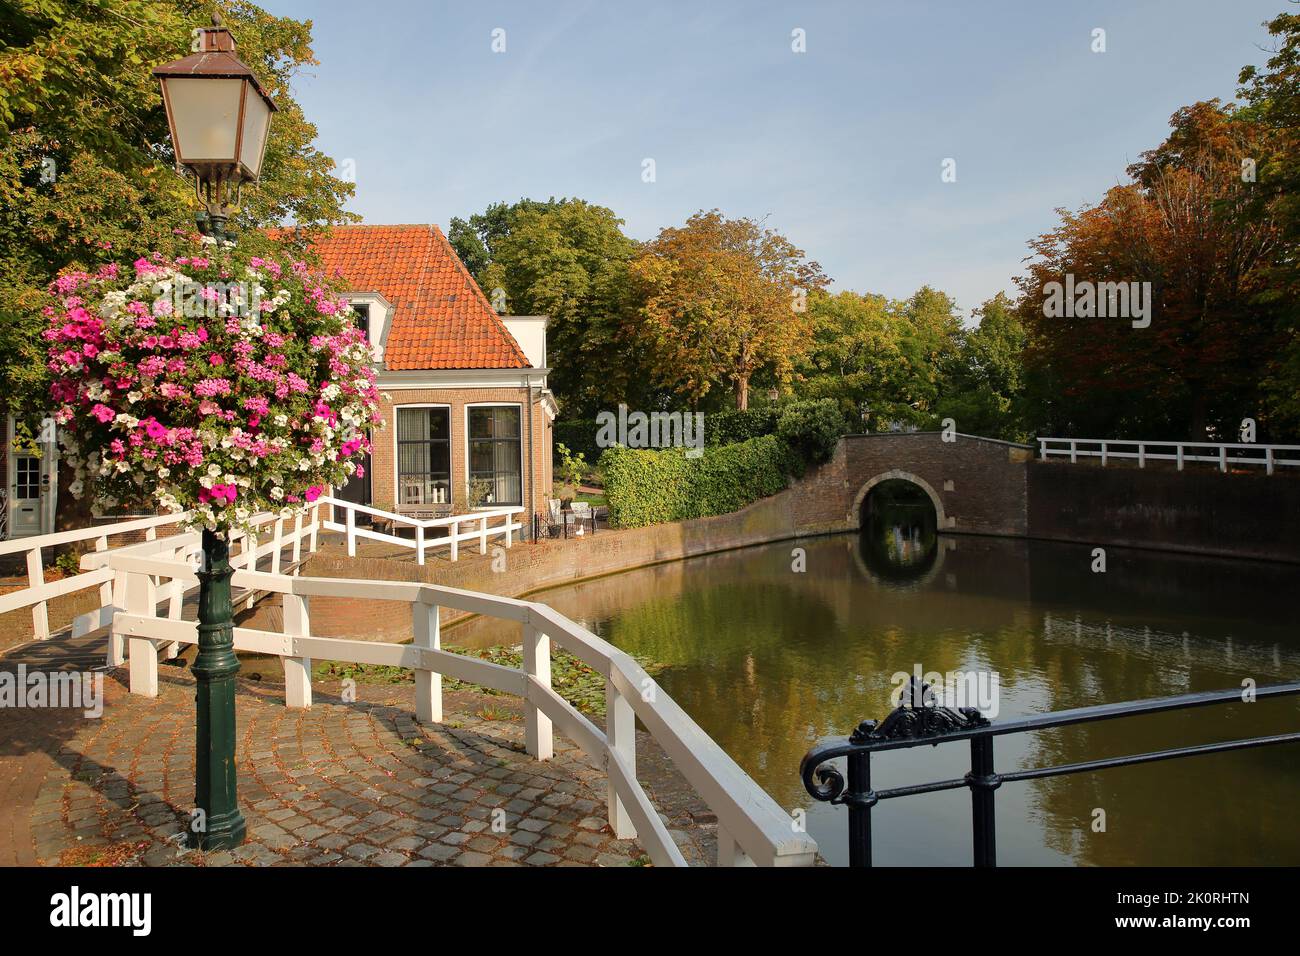 Waterpoortbrug bridge and historical houses viewed from Kippebruggetje bridge in the city center of Hoorn, West Friesland, Netherlands Stock Photo